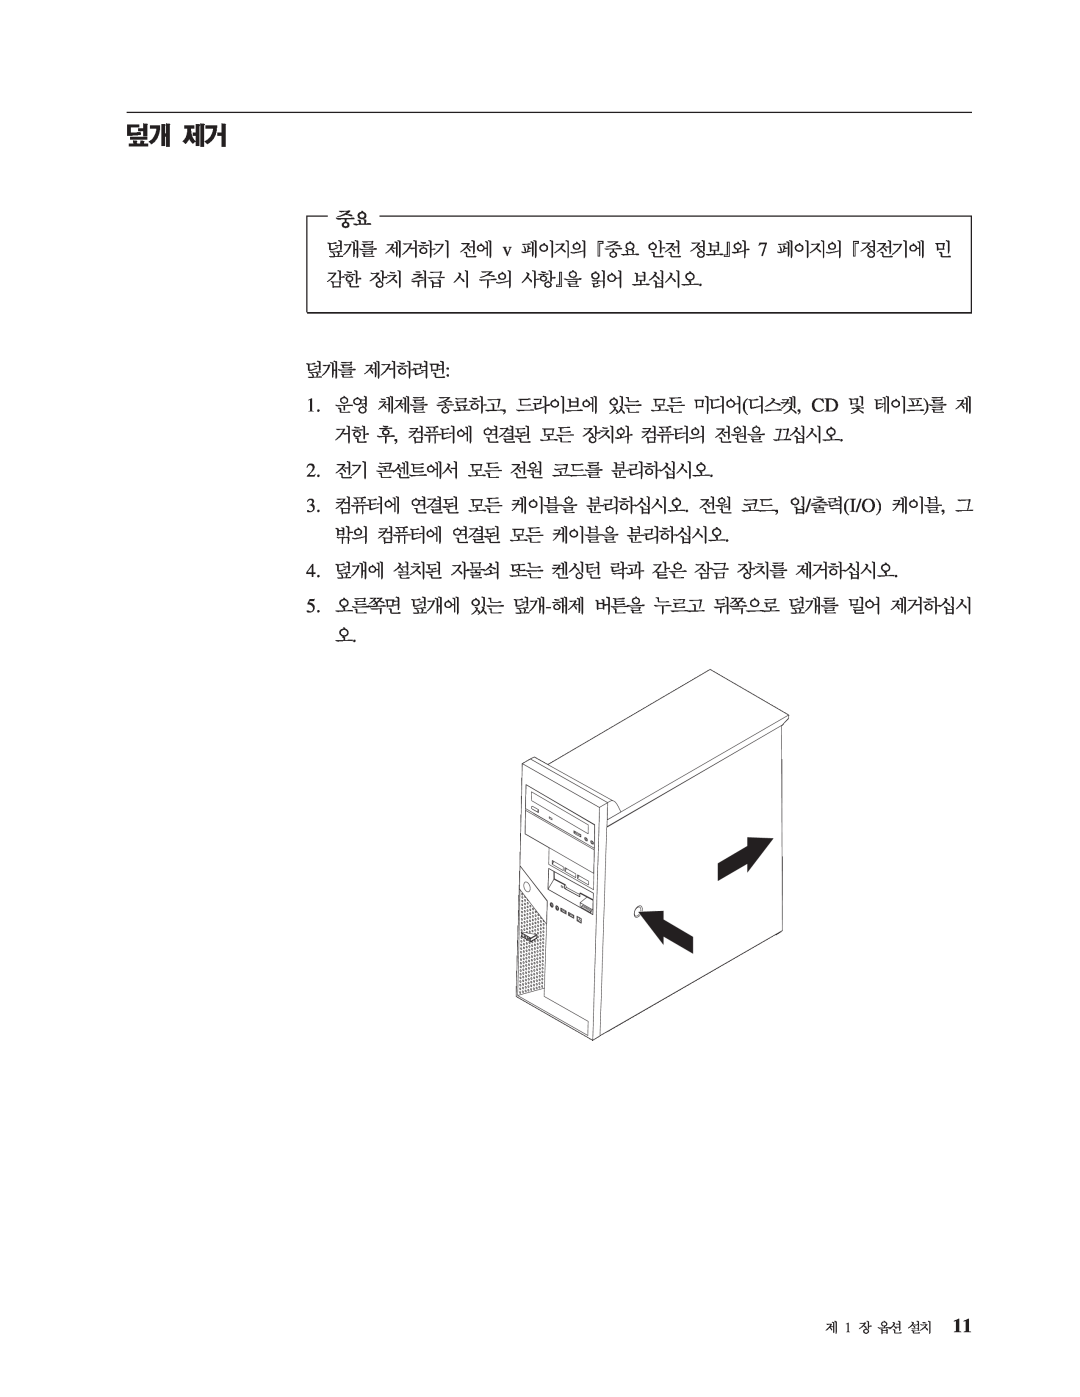 IBM 8143 manual 1. , , CD, I/O 